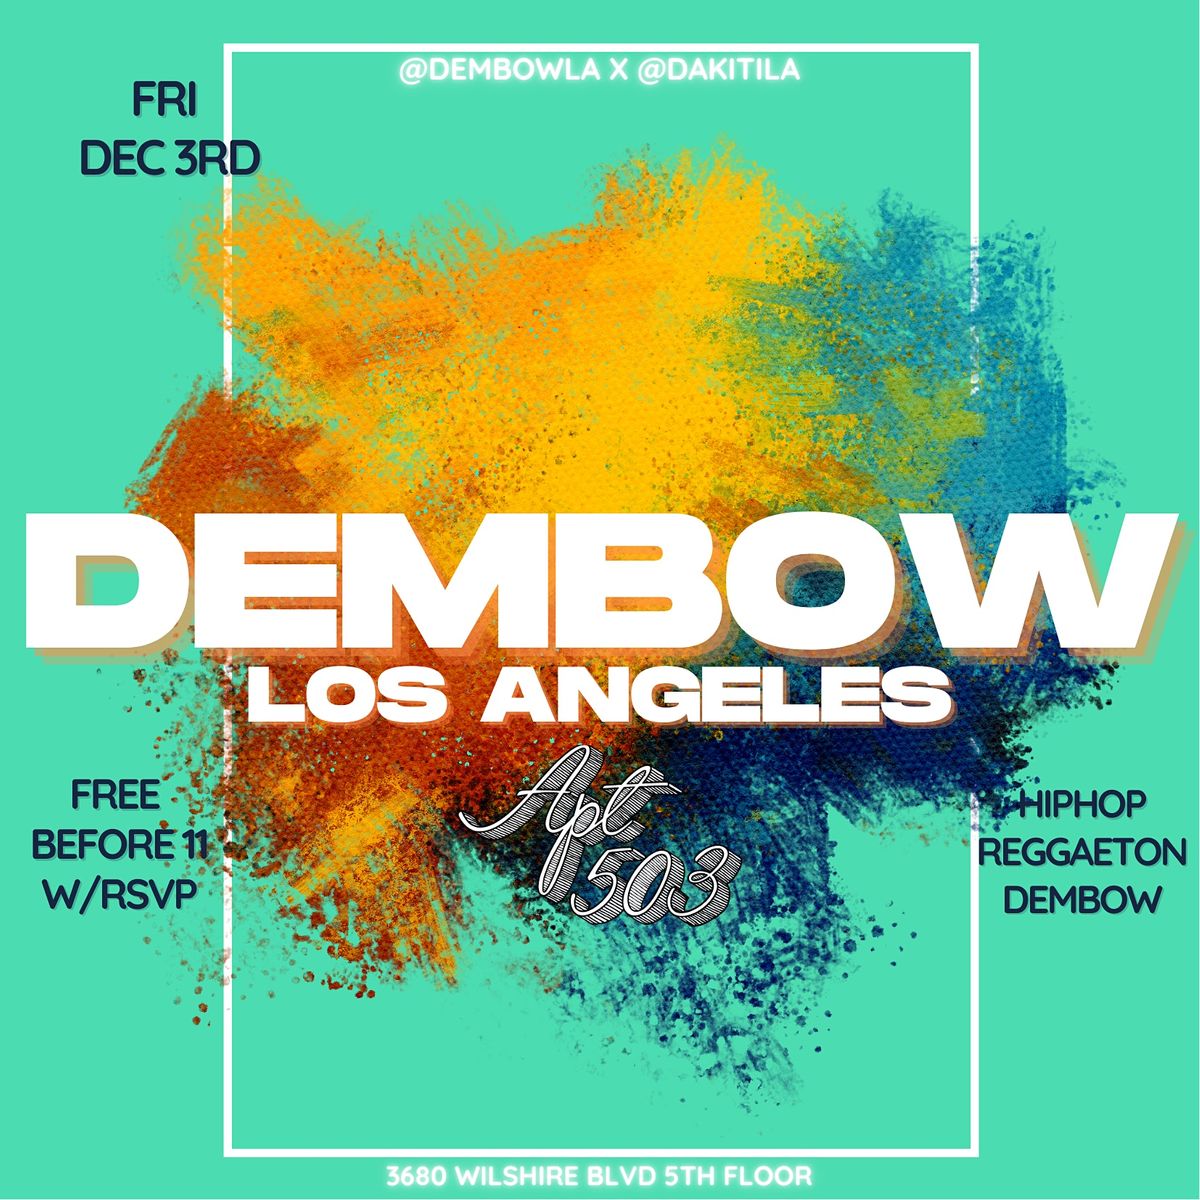 Dembow Los Angeles